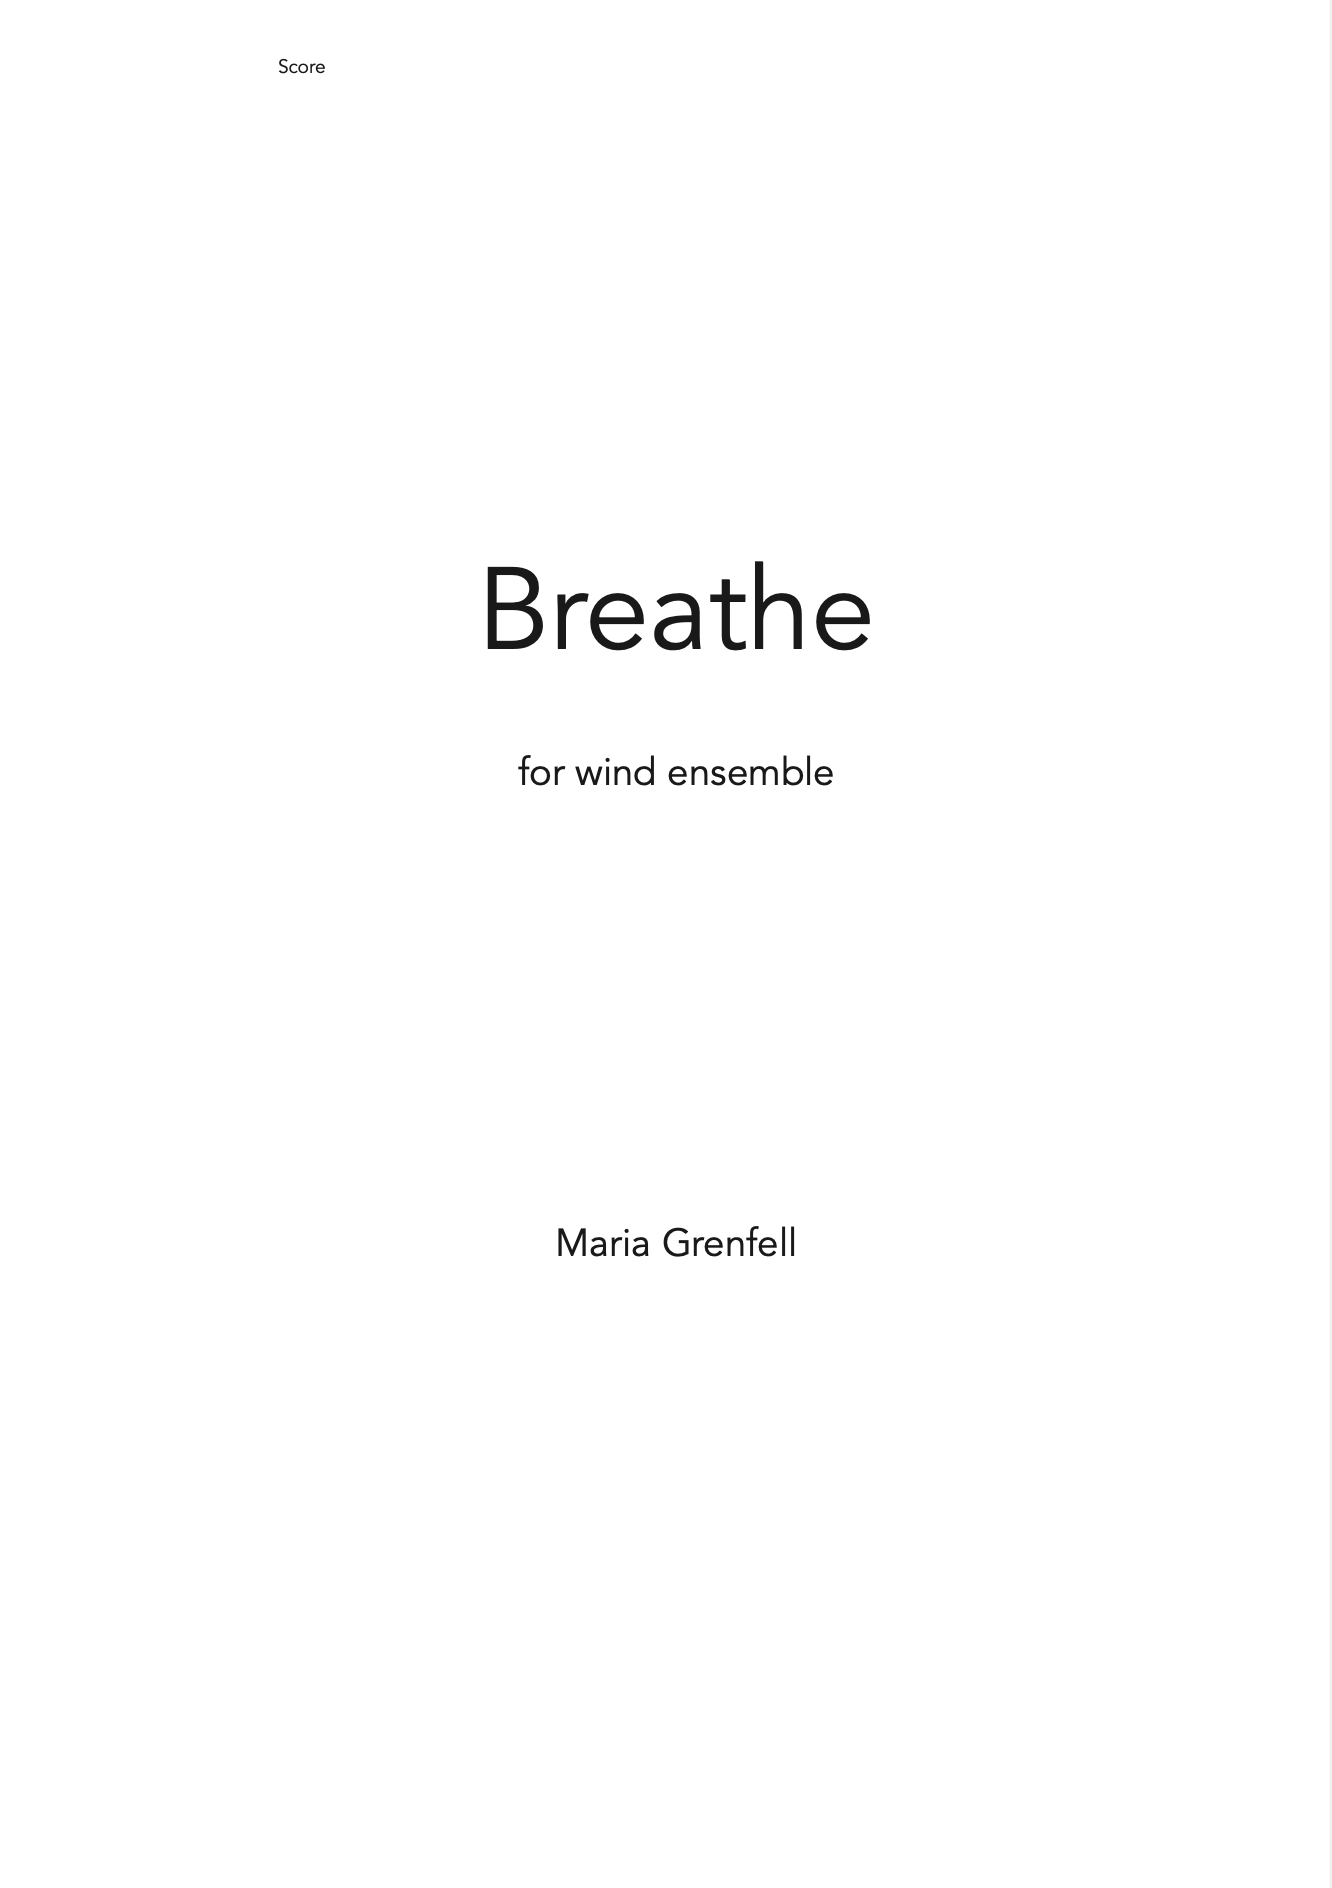 Breathe by Evan Williams